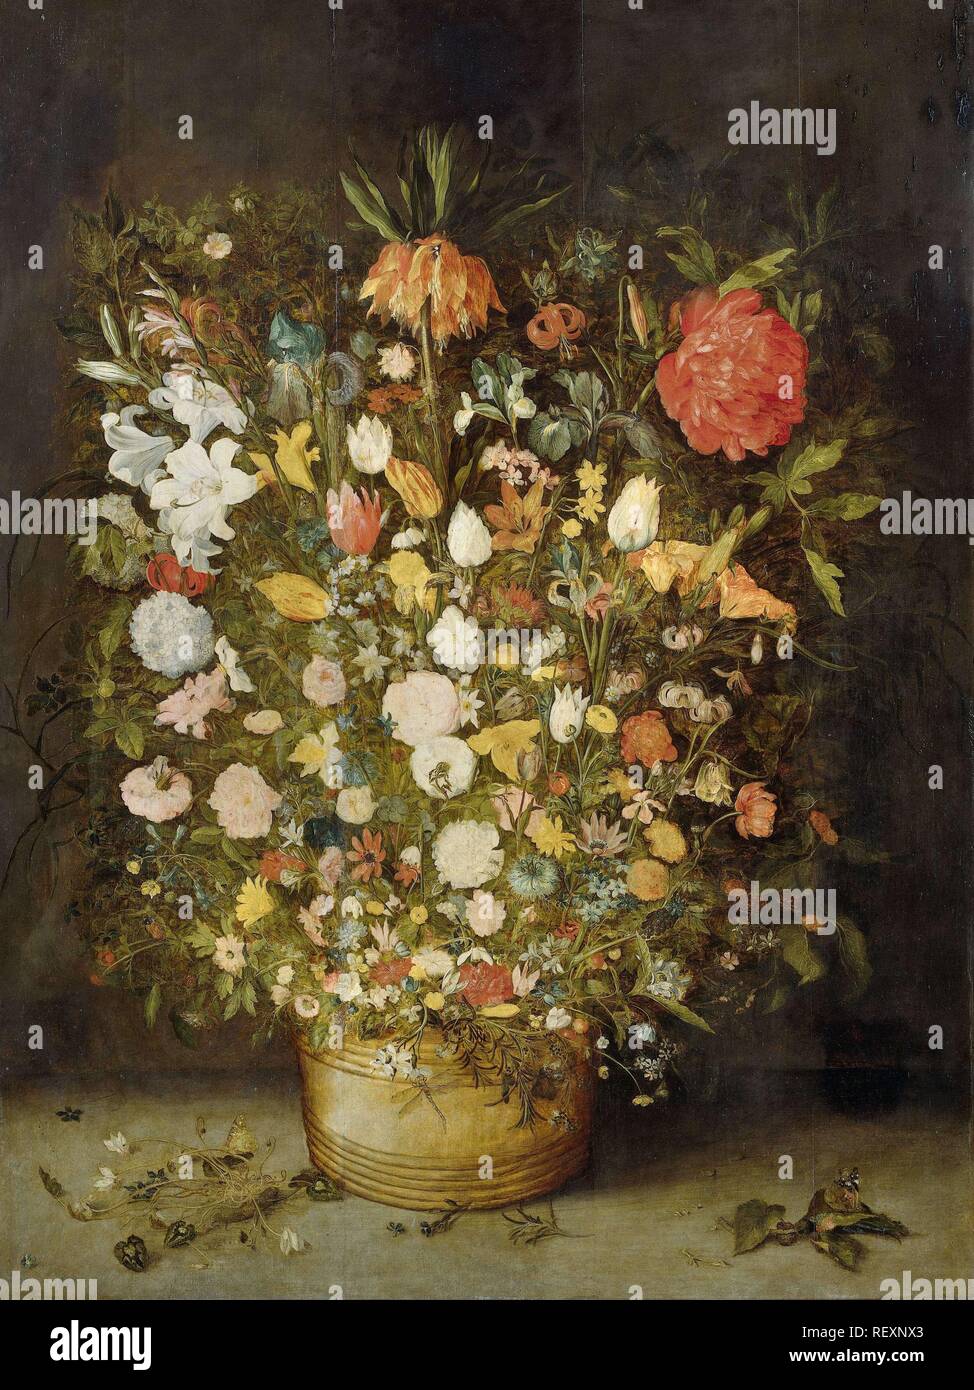 Still Life with Flowers. Dating: 1600 - 1630. Measurements: h 113.7 cm × w 86.4 cm. Museum: Rijksmuseum, Amsterdam. Author: Jan Brueghel (I) (workshop of). JAN BRUEGHEL, THE ELDER. Bruegel the Elder, Jan. Stock Photo